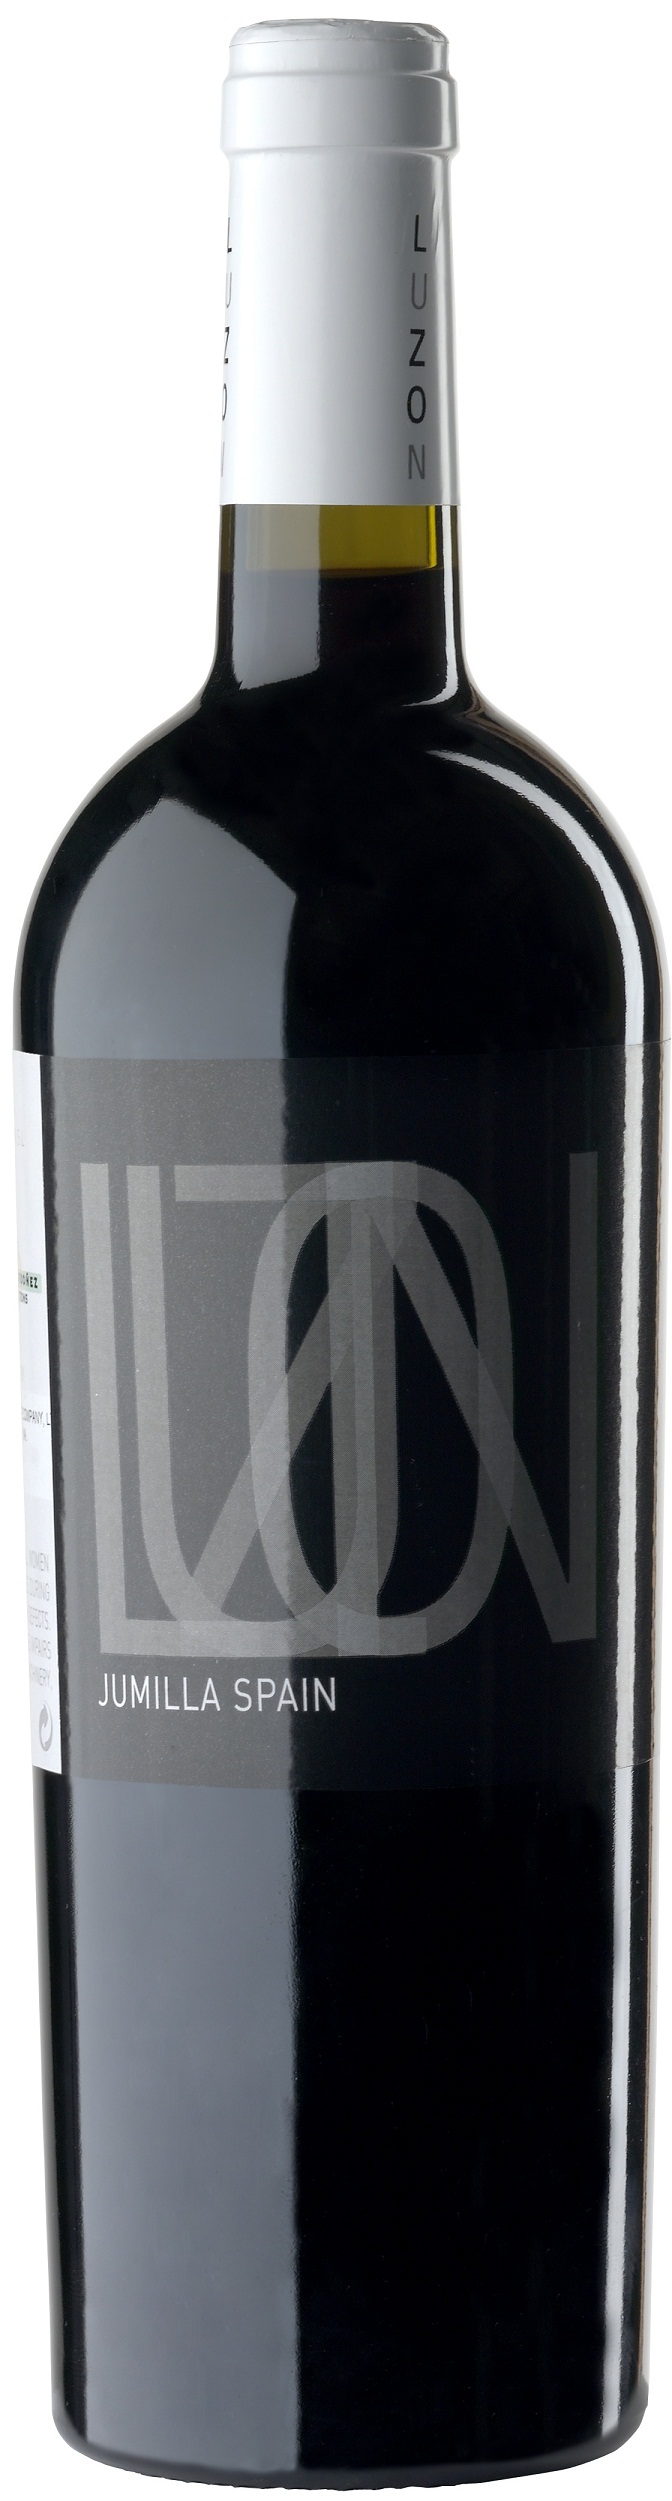 Image of Wine bottle Luzón Joven